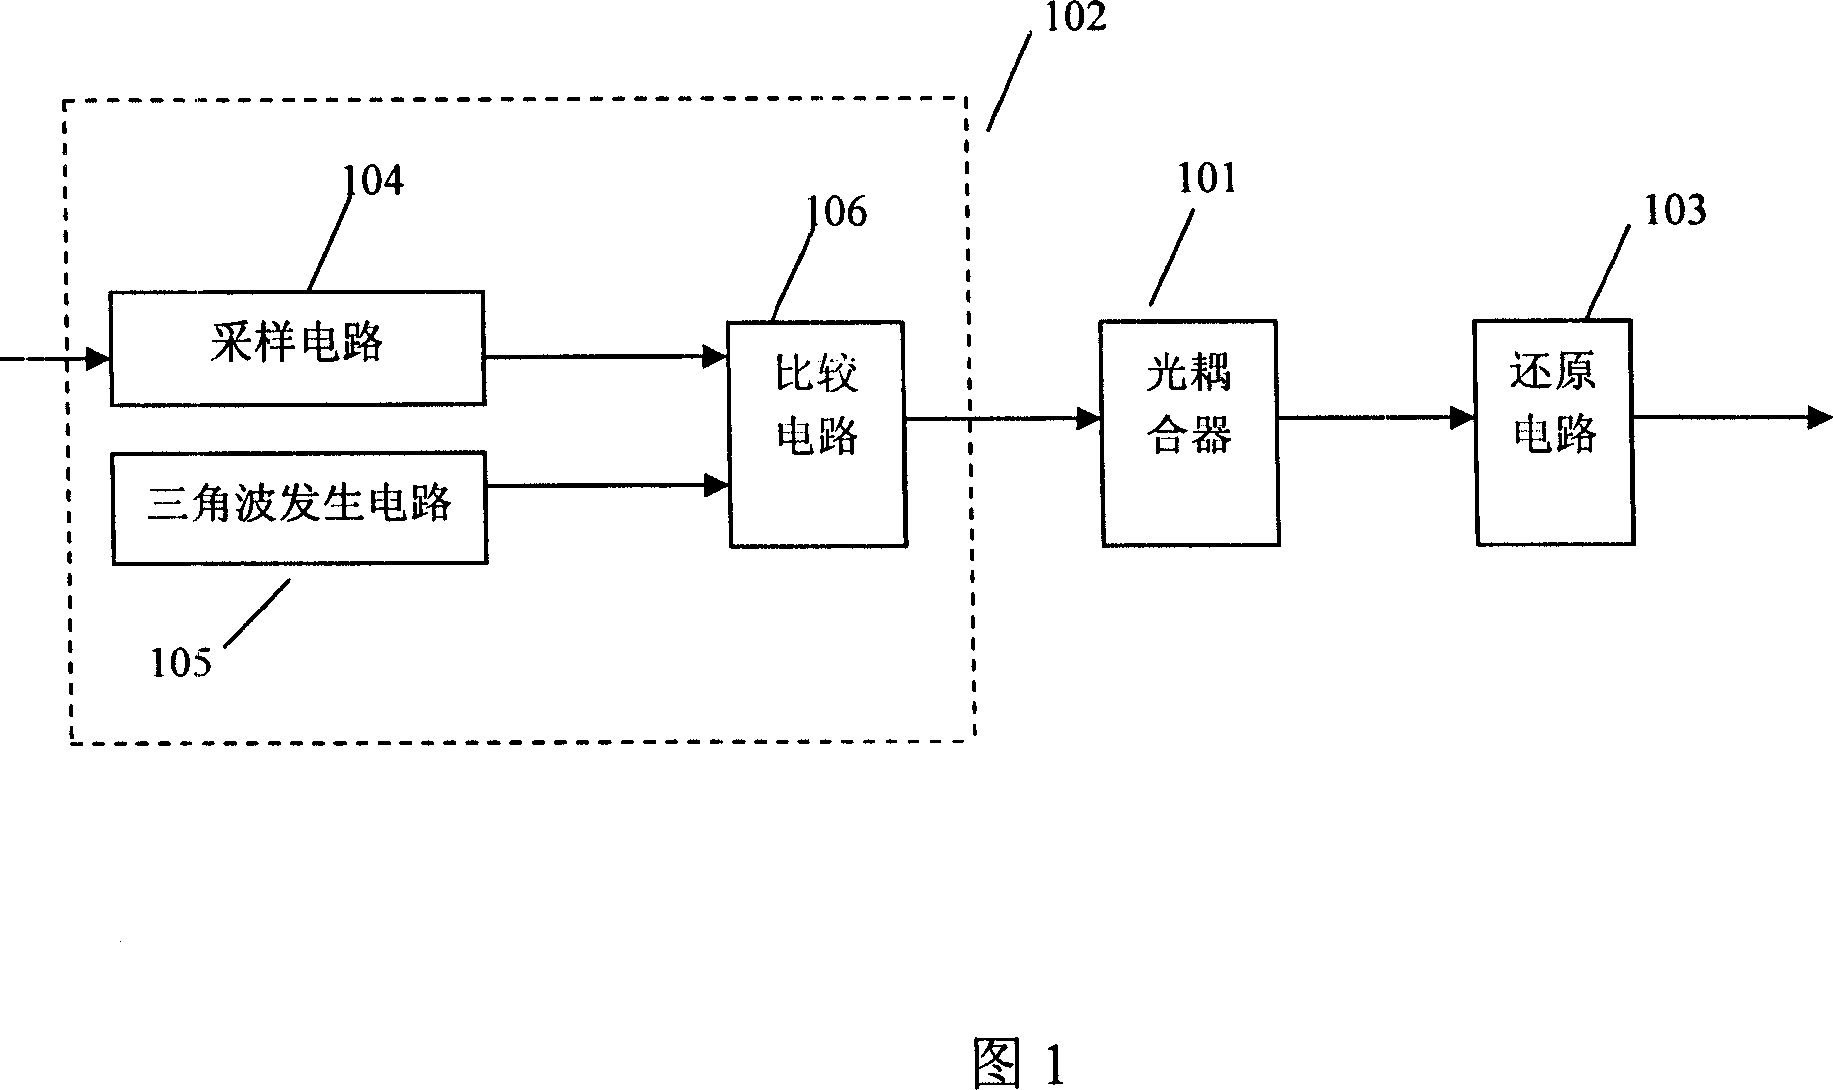 Signal isolation transfer circuit